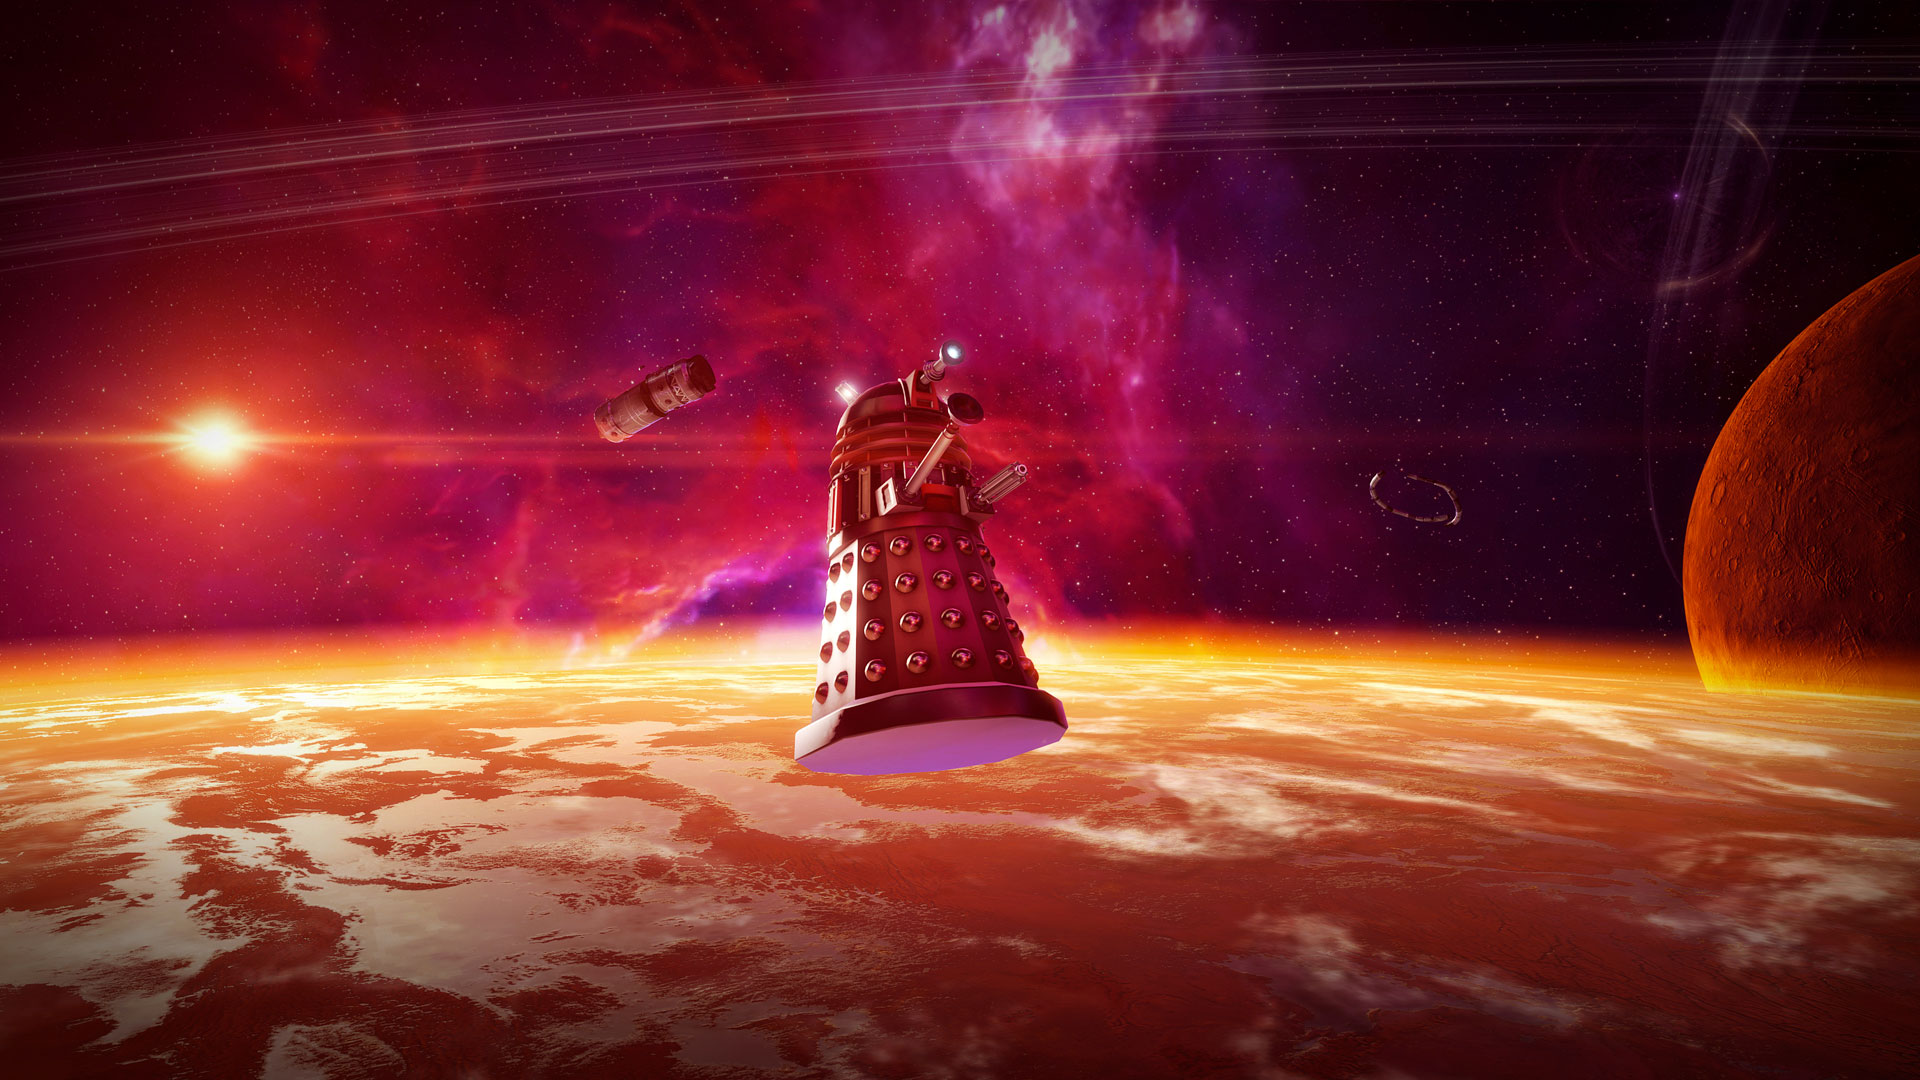 Dalek in space in EVE Online